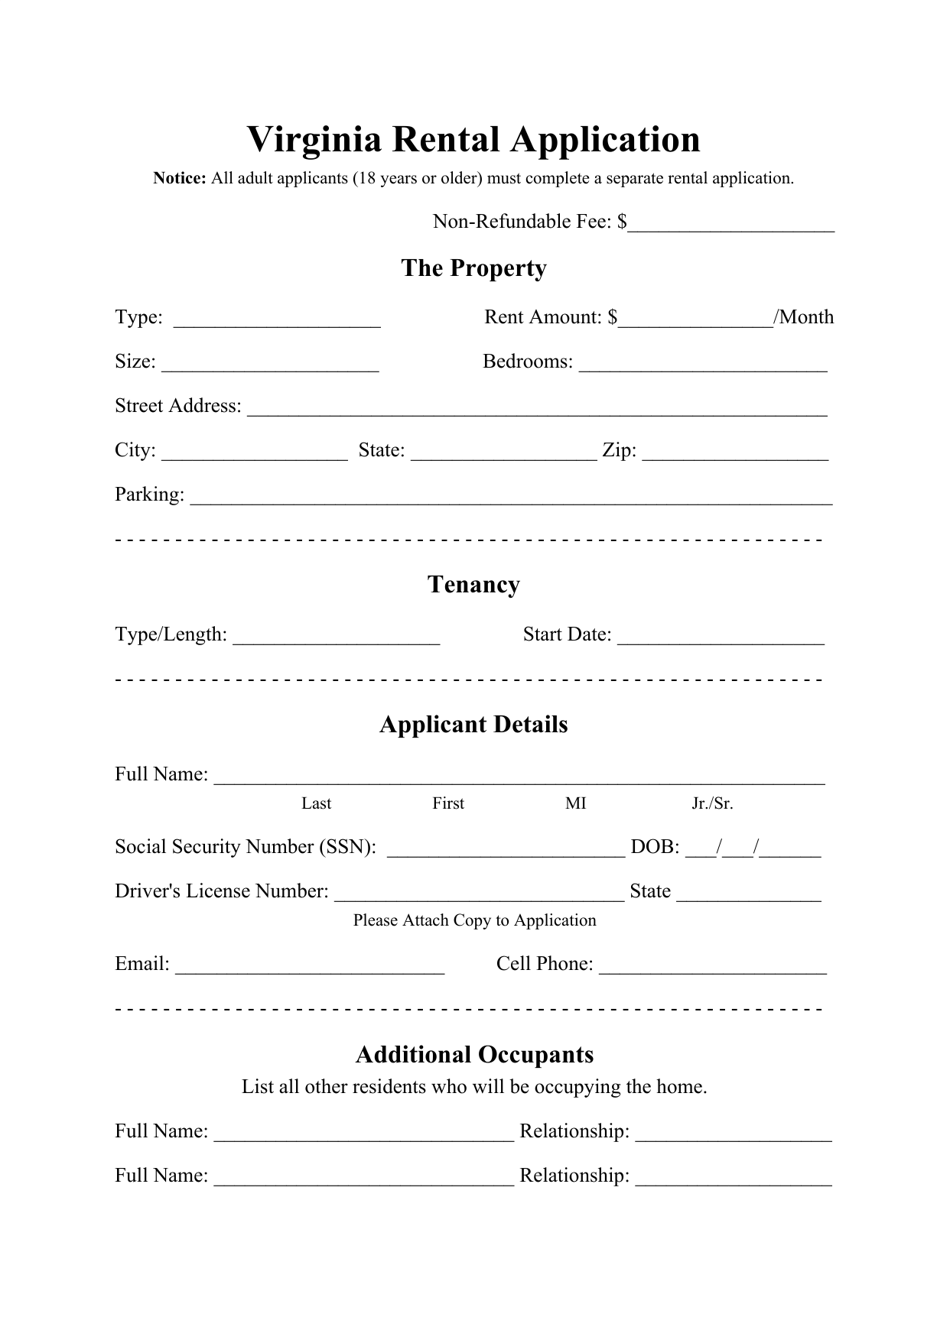 virginia-rental-application-form-download-printable-pdf-templateroller